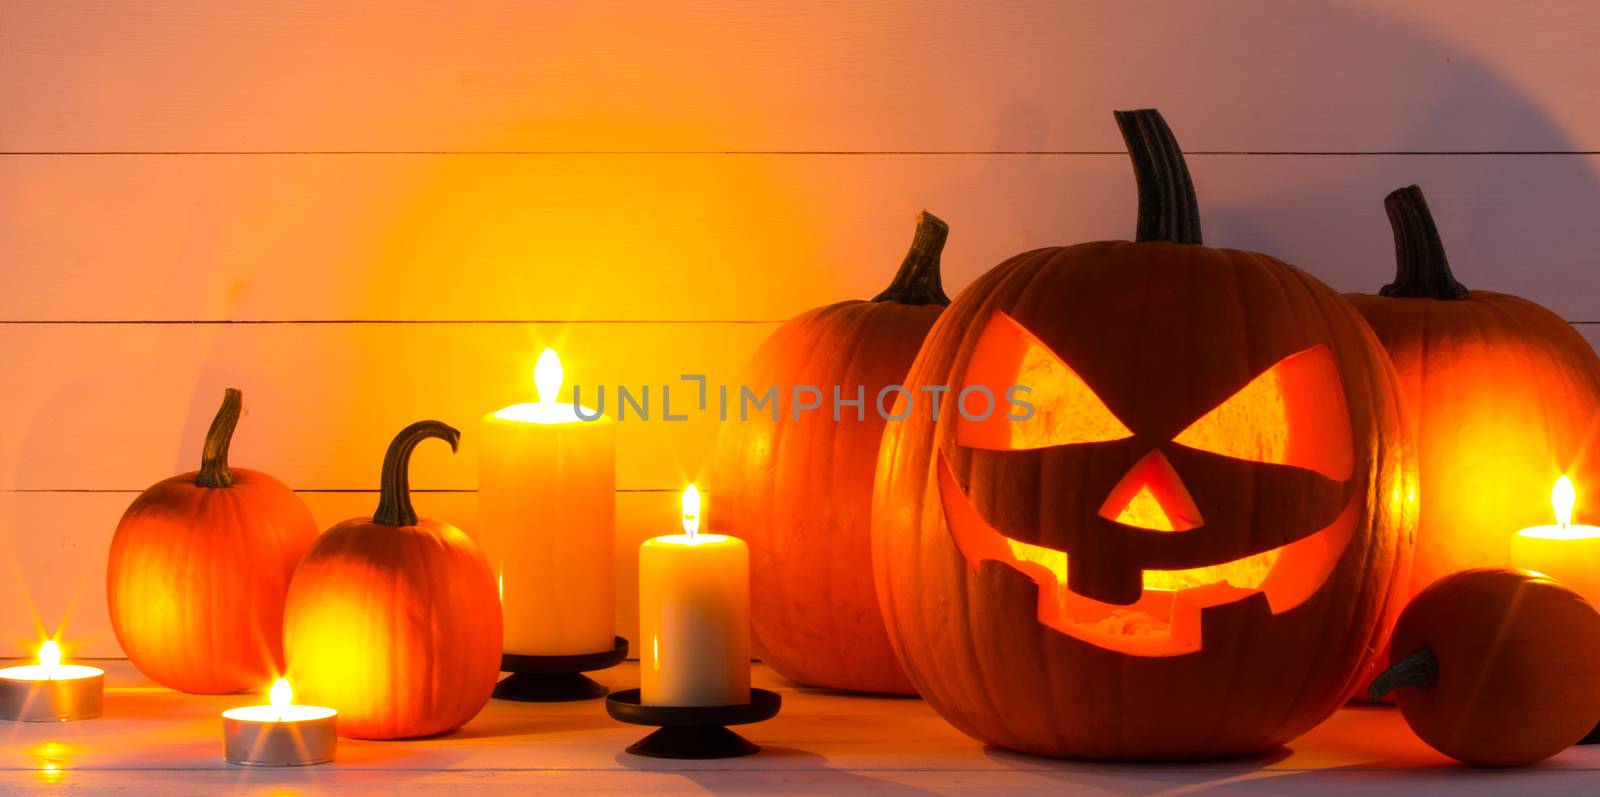 Halloween pumpkin head jack lantern and candles on wooden background